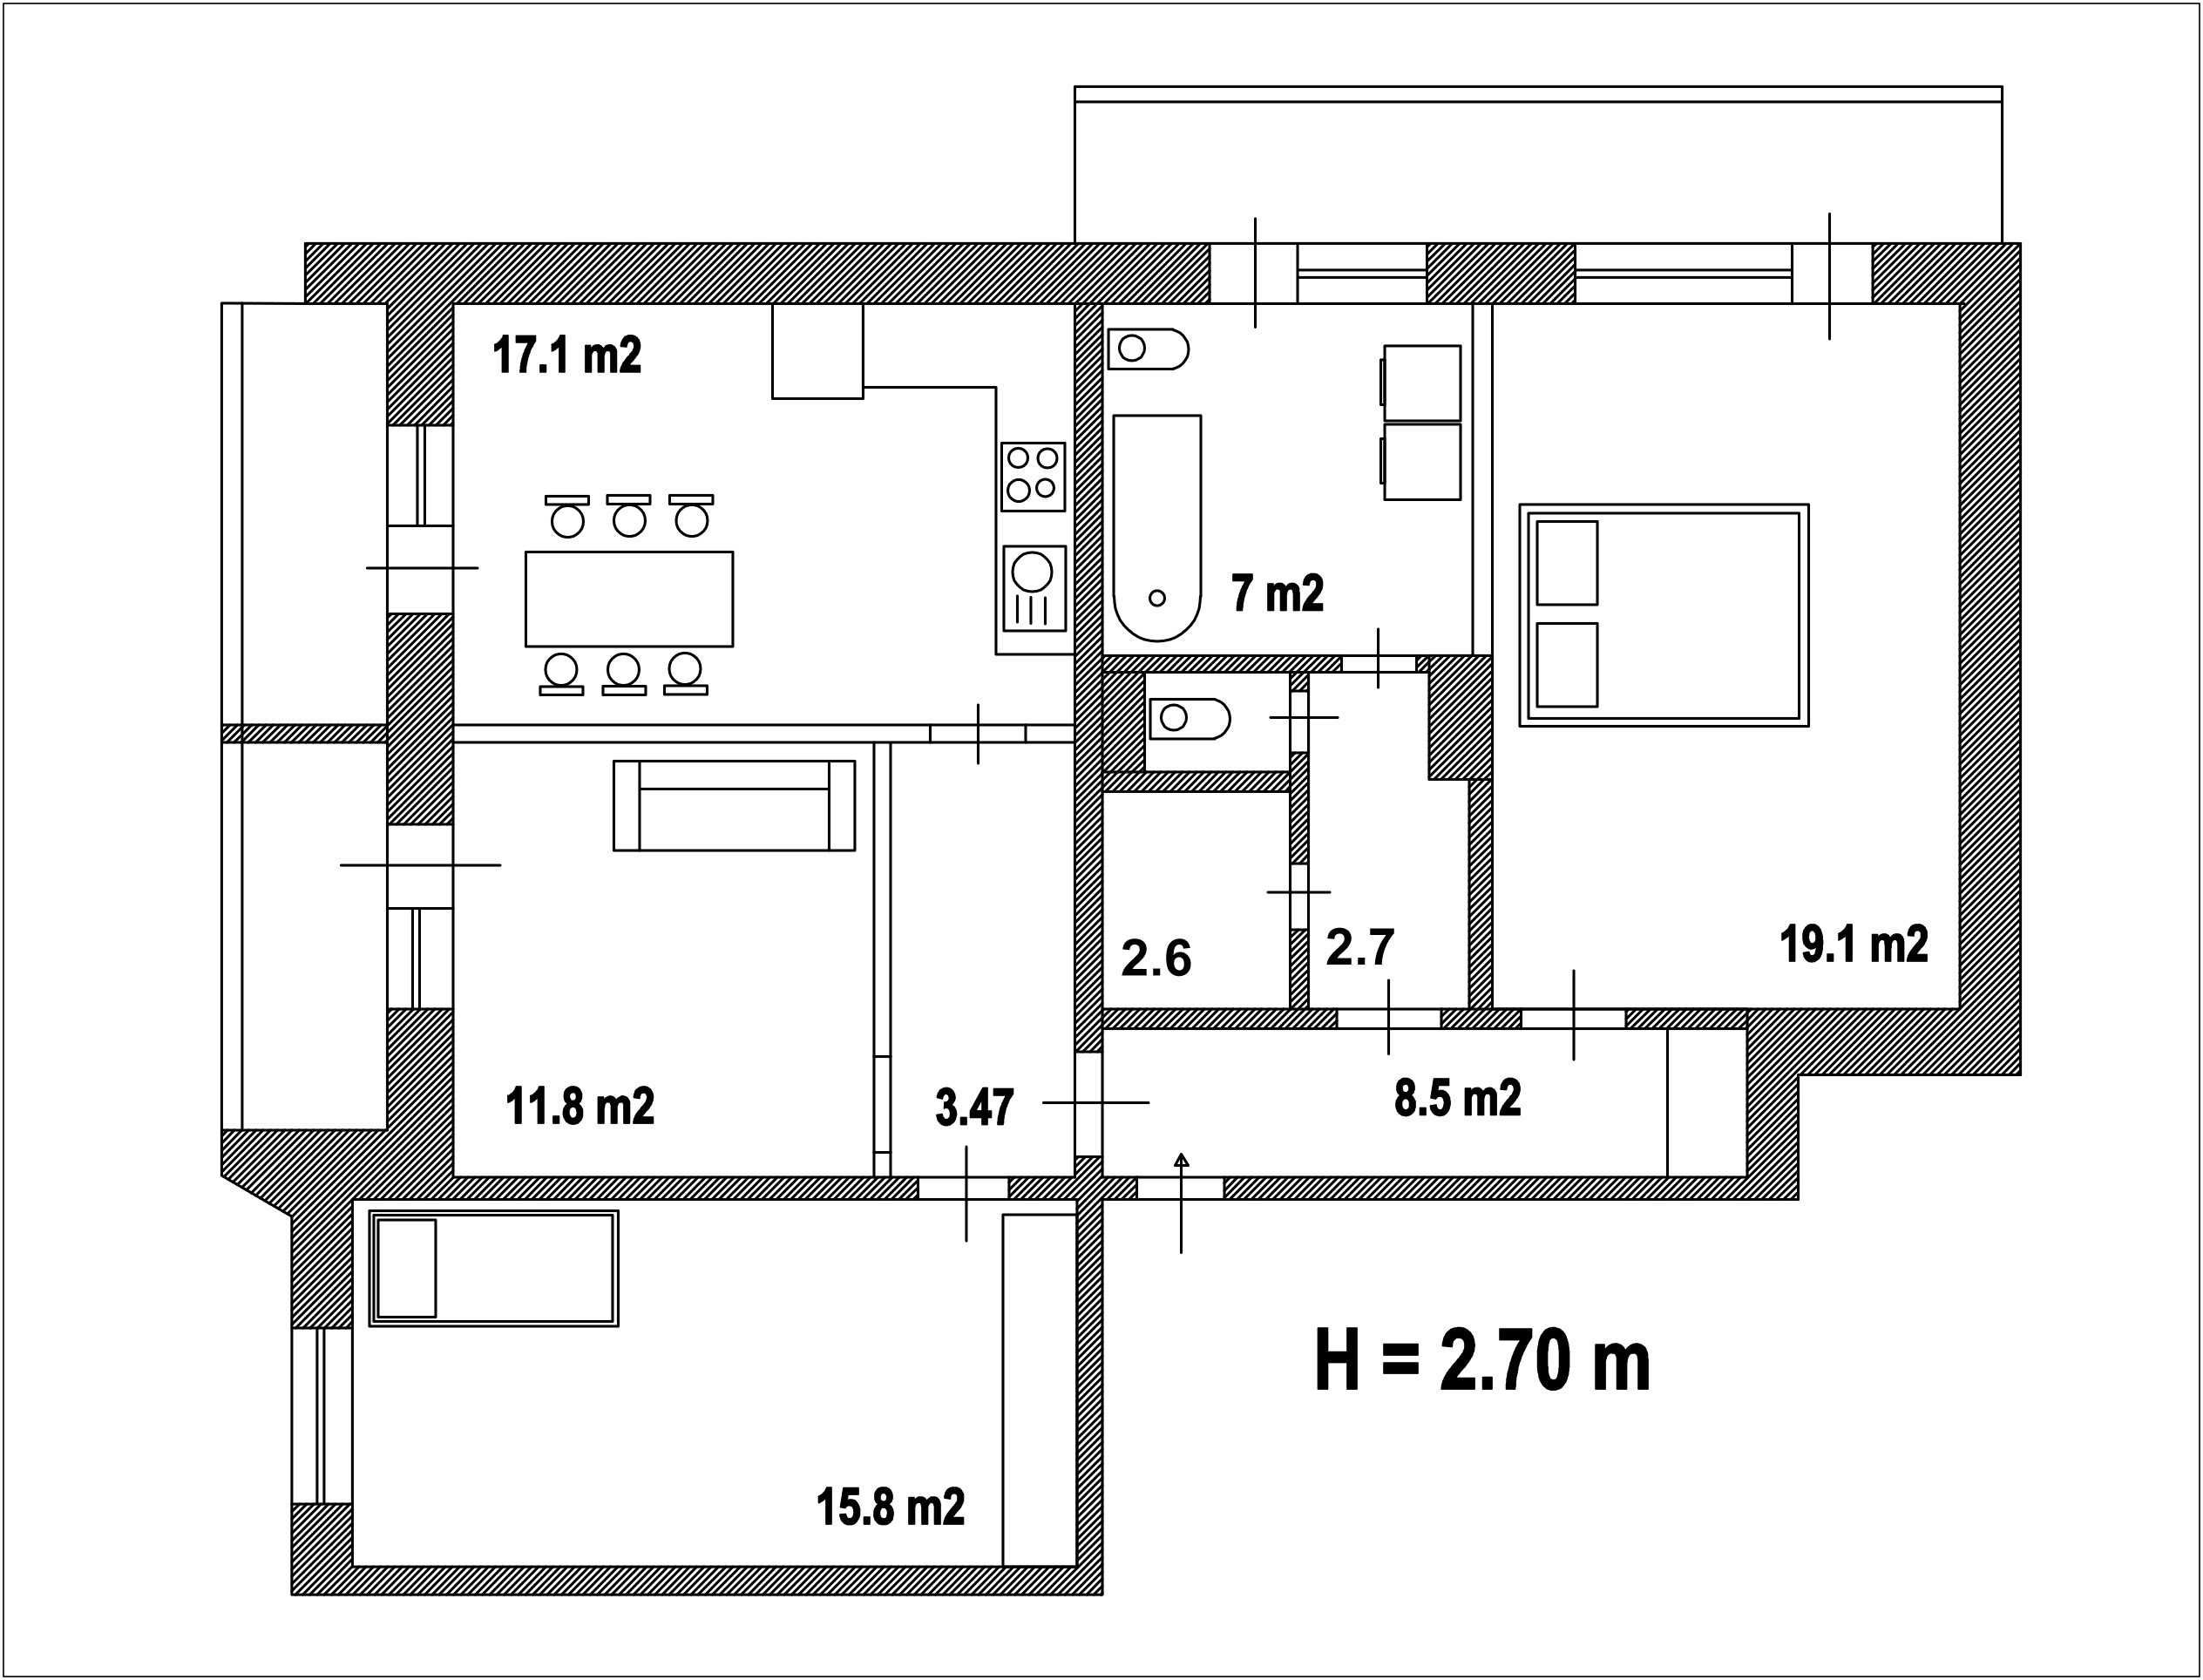 Продам 4х комнатную квартиру на Троещине 90 m2 + балконы